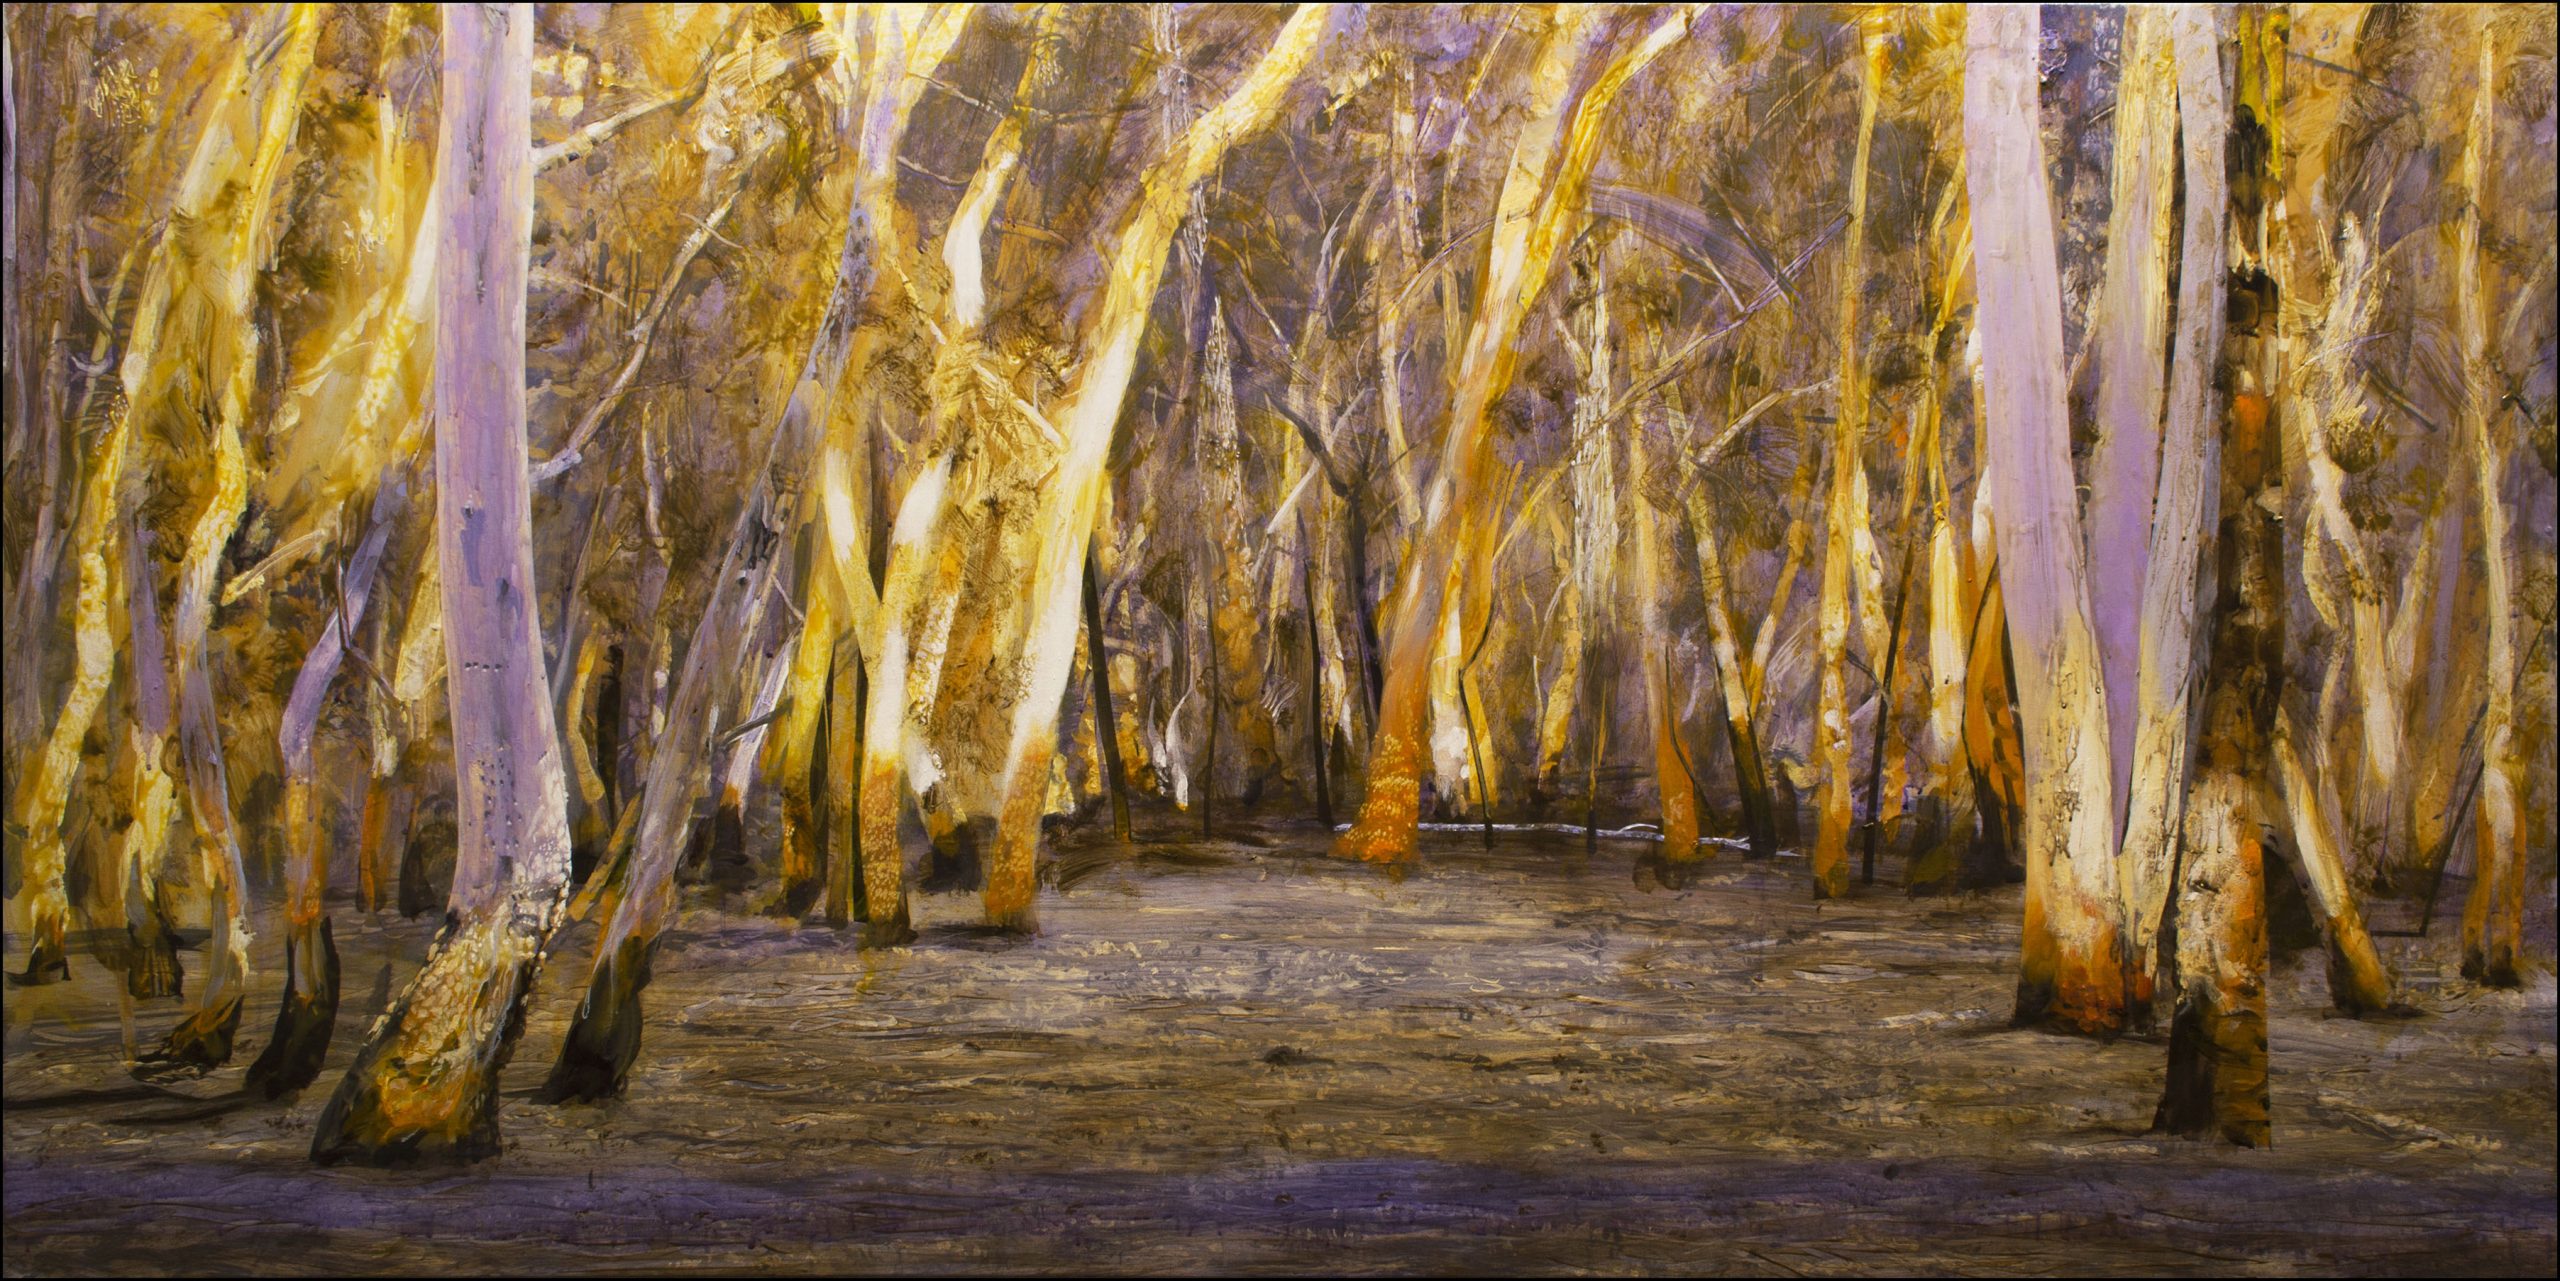 Neil Taylor 'Forest Dawn I' acrylic on canvas 91 x 183cm $16,500